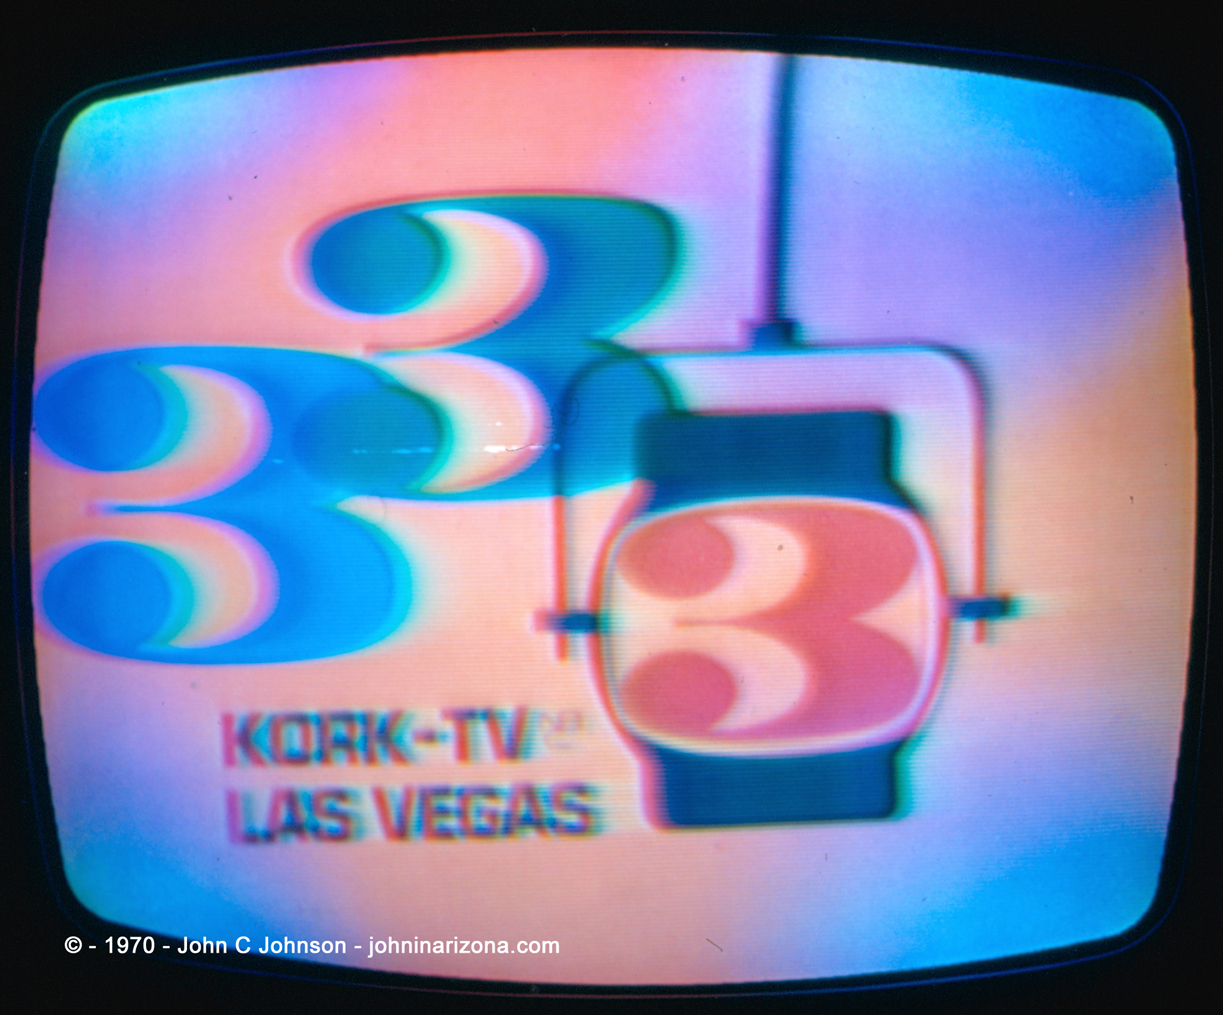 KORK TV Channel 3 Las Vegas, Nevada